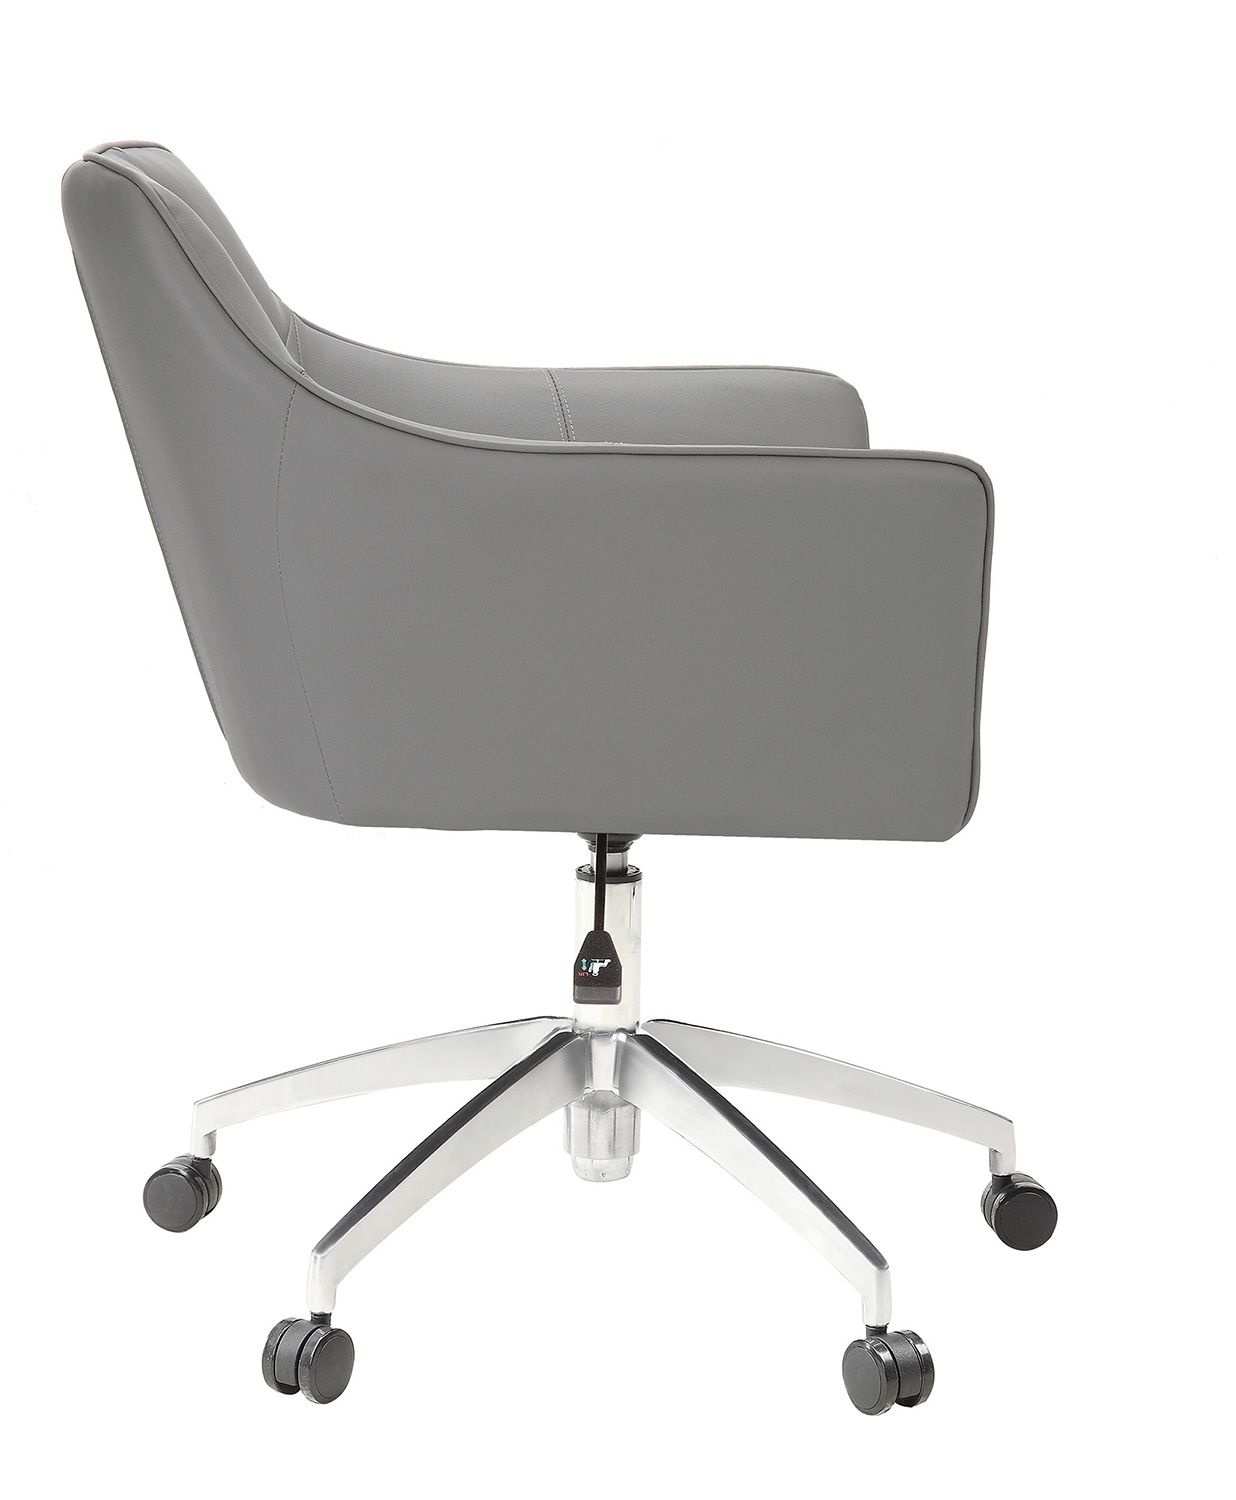 Coaster 801538 Office Chair - Grey/Aluminum